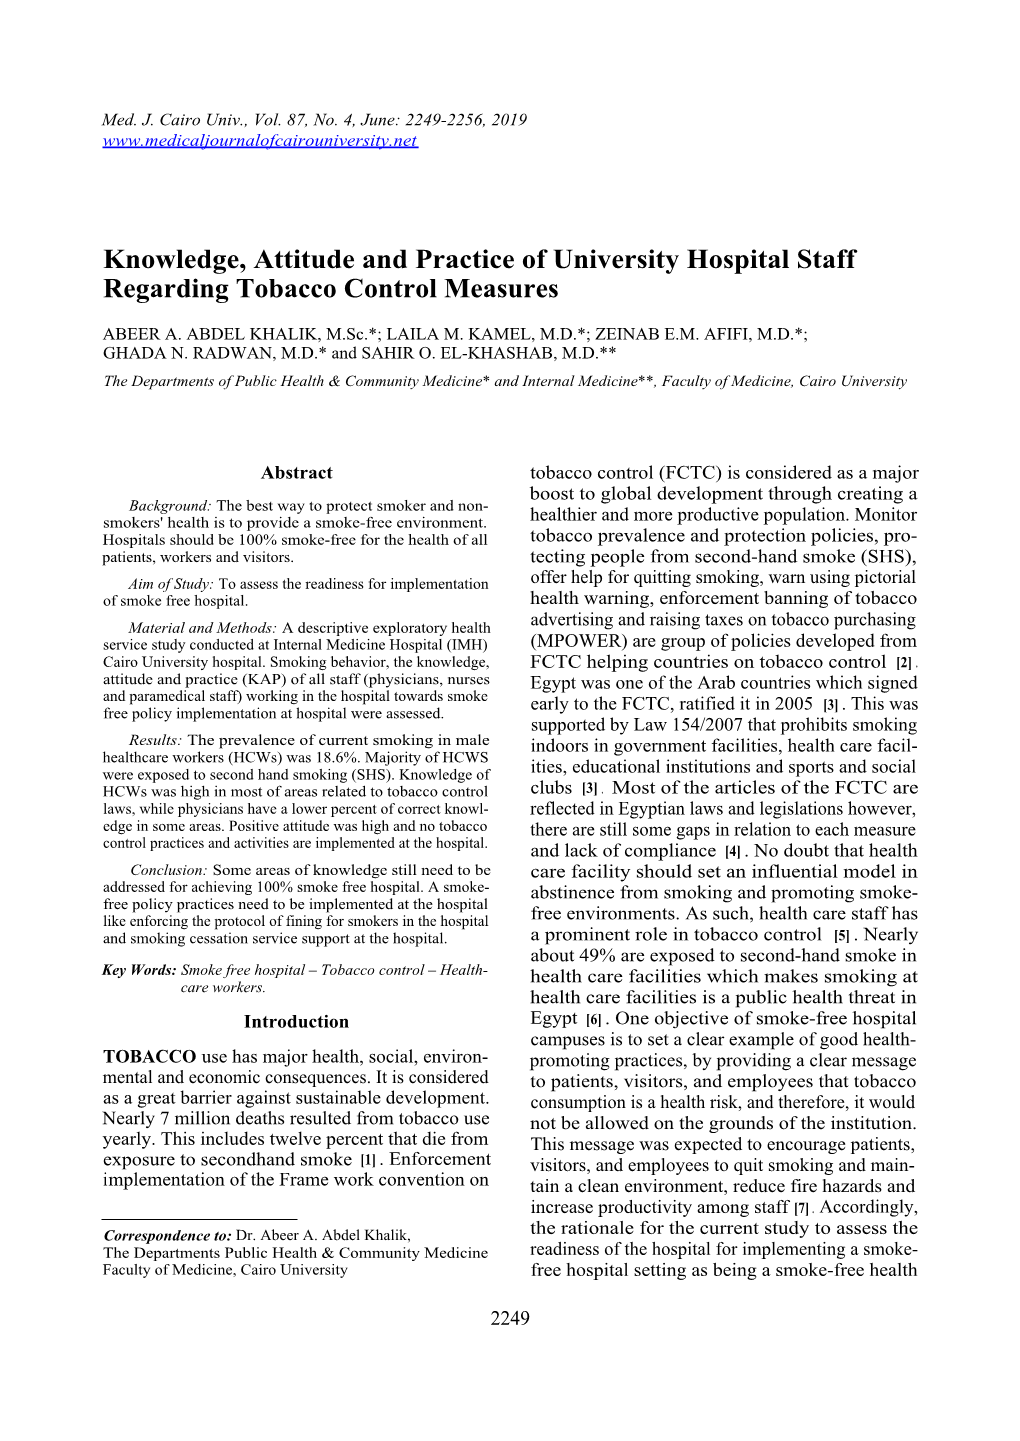 Knowledge, Attitude and Practice of University Hospital Staff Regarding Tobacco Control Measures